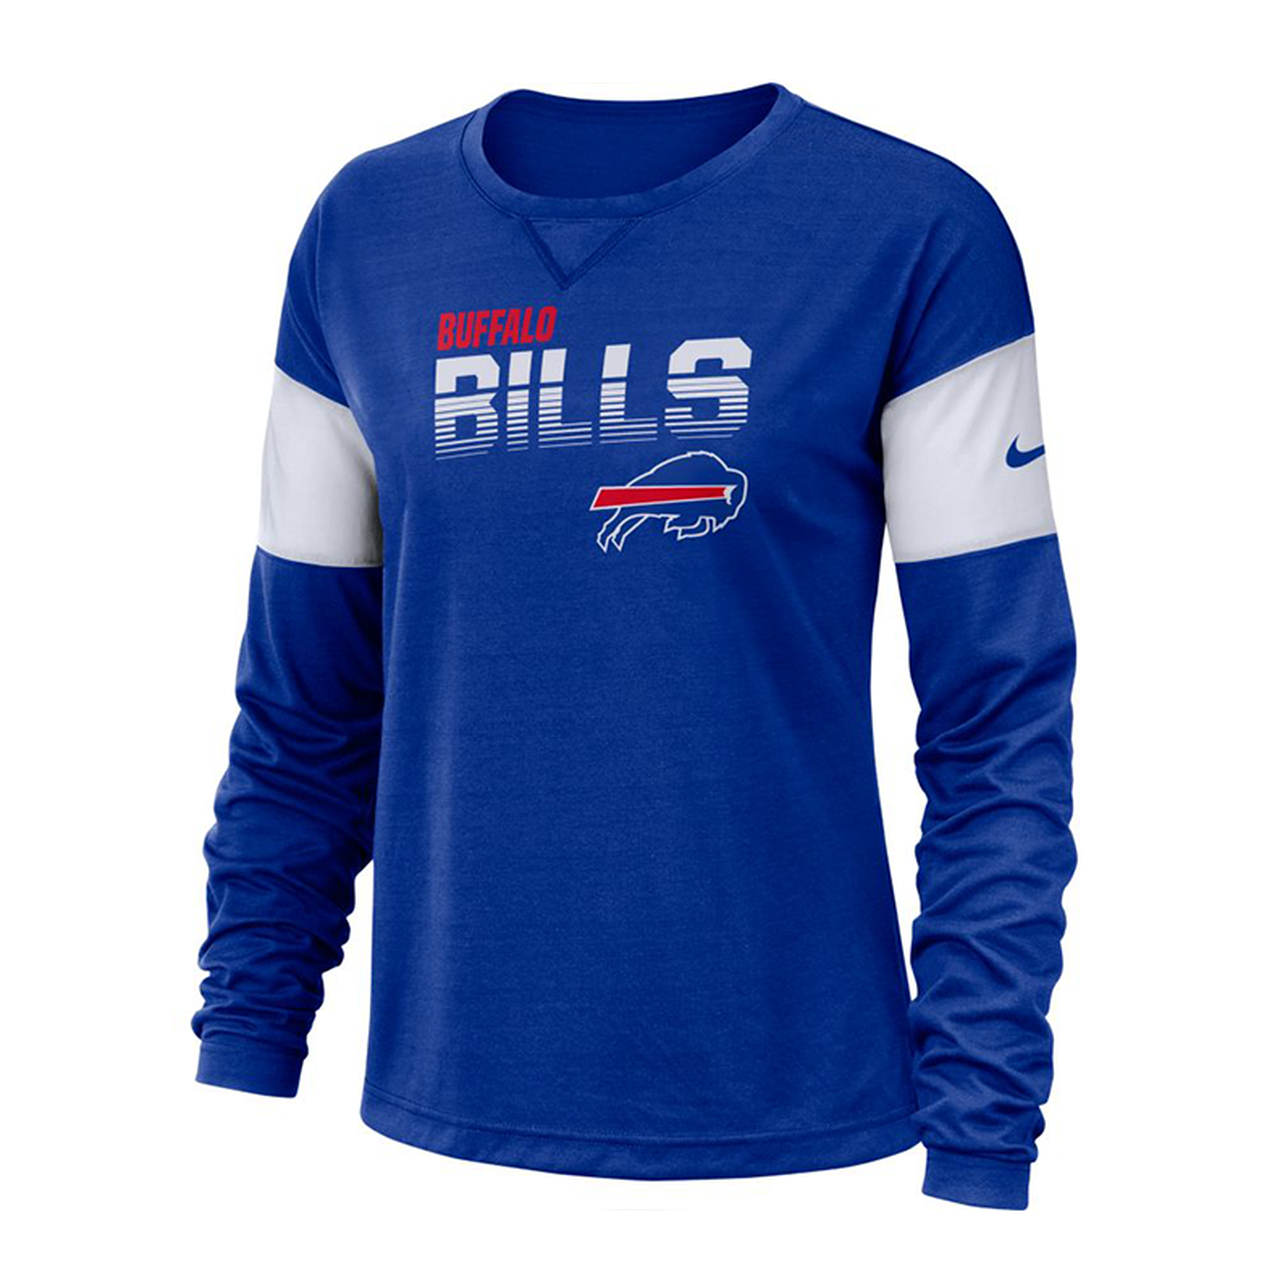 Buffalo Bills Jerseys For Sale : Top 